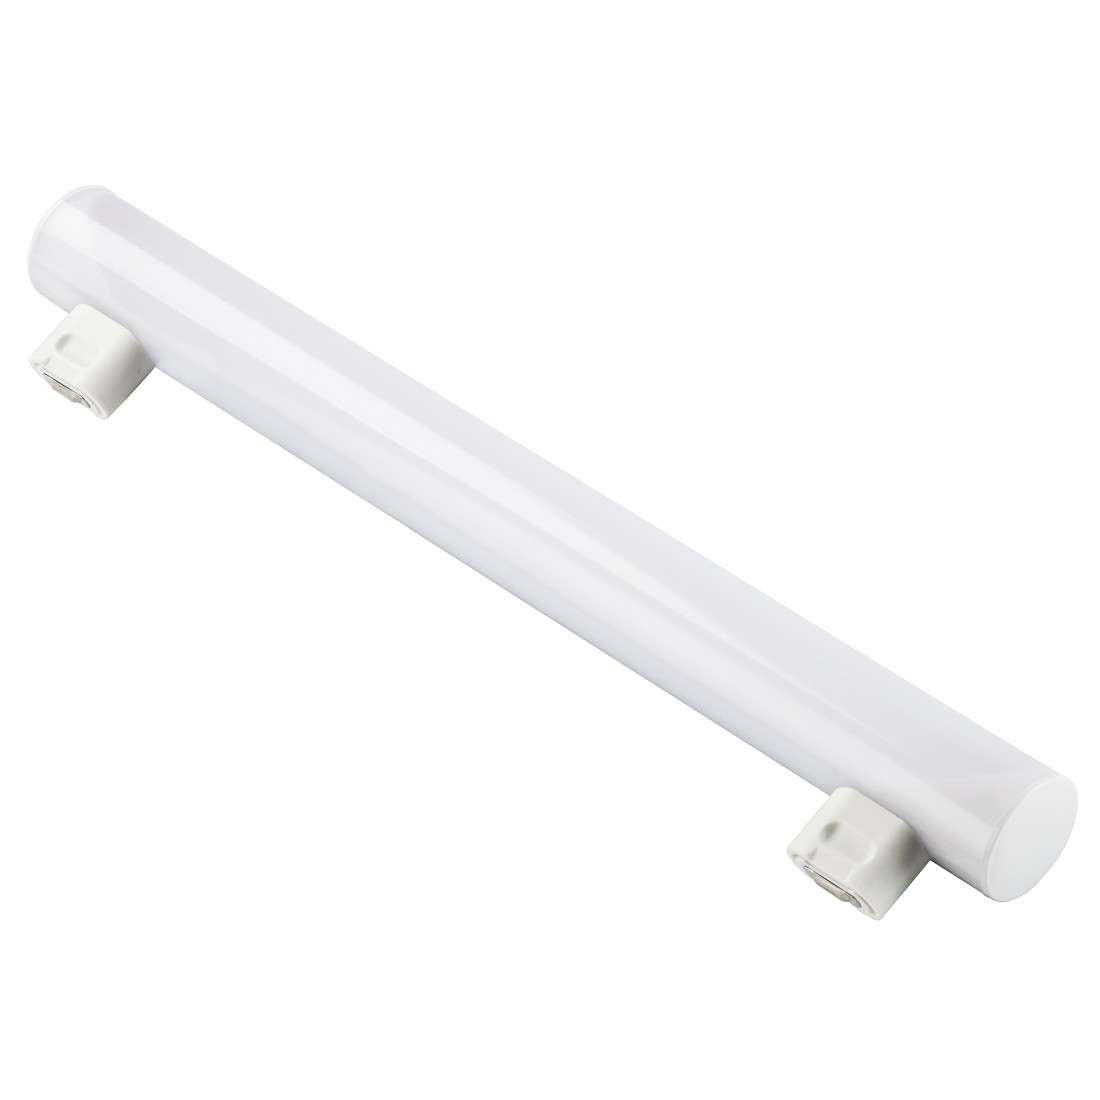 LED-Lampe, S14s, 320lm ersetzt 30W, Linien-Lampe, 30 cm, Warmweiß